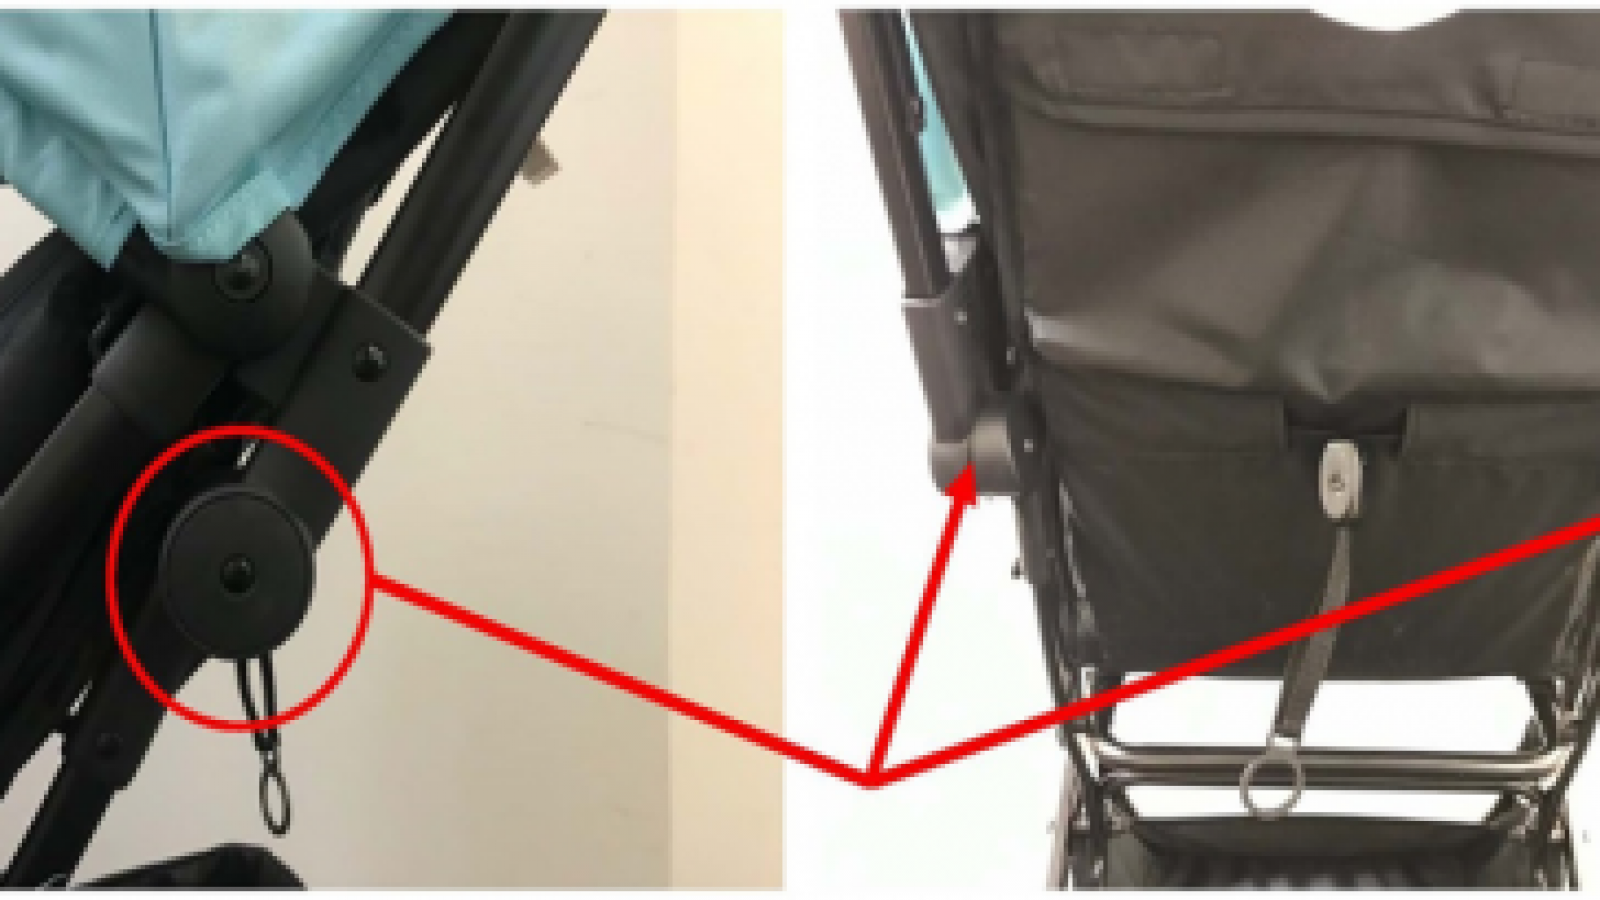 Baby Trend Stroller Recalled Due To Fall Hazard For Children